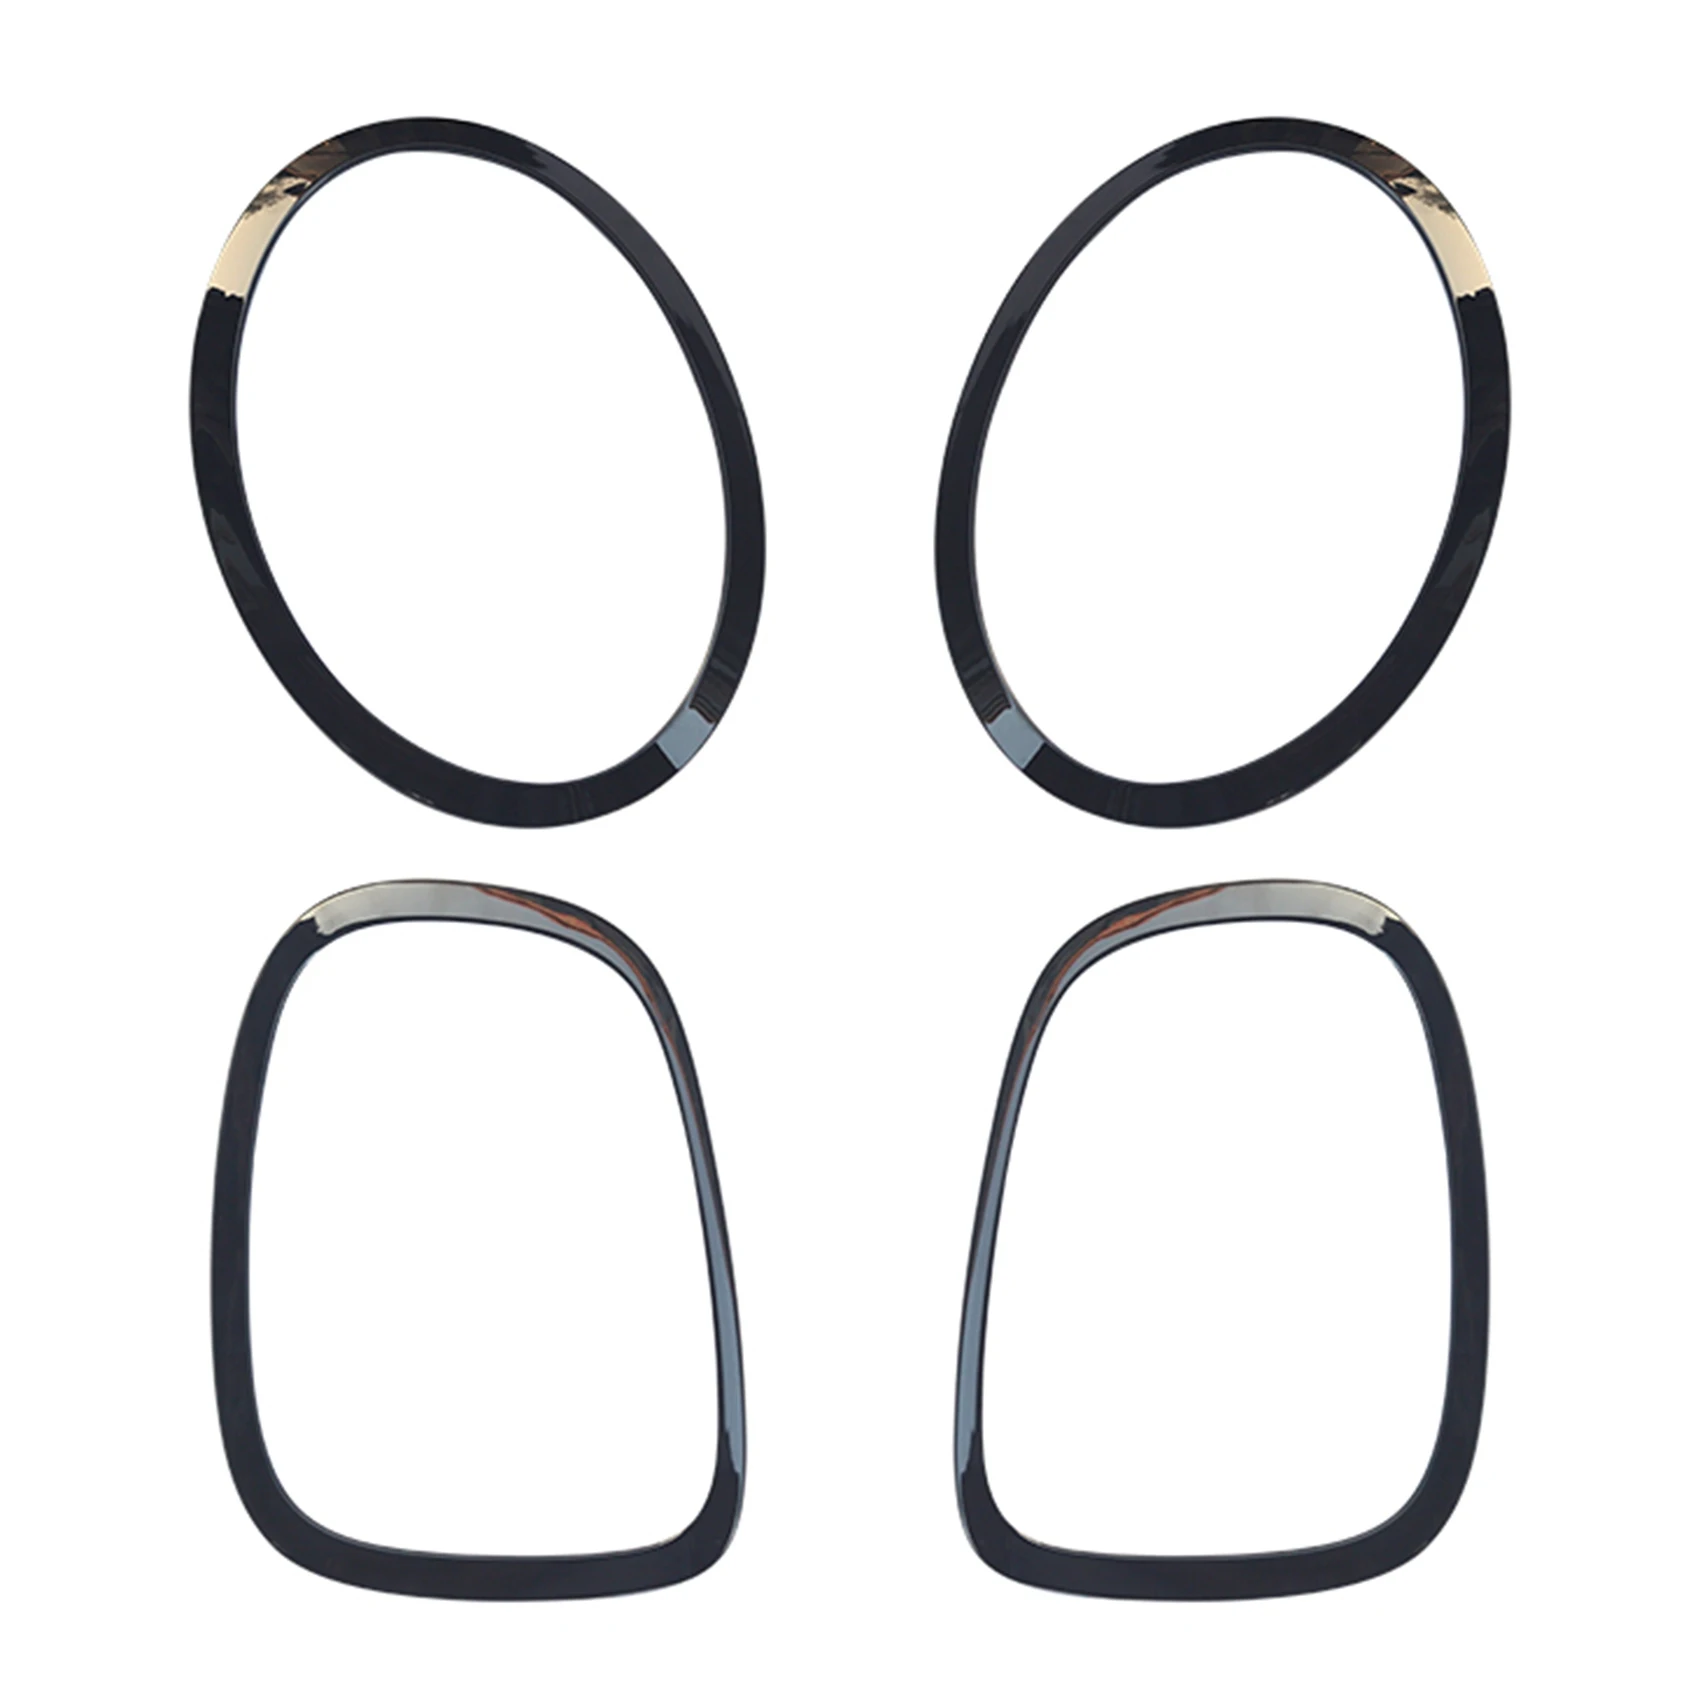 

New Headlight Trim Ring Headlight Surround Ring for Mini Cooper R56 R57 R58 R59 2007-2013 3 Doors 51137149906 51137149905